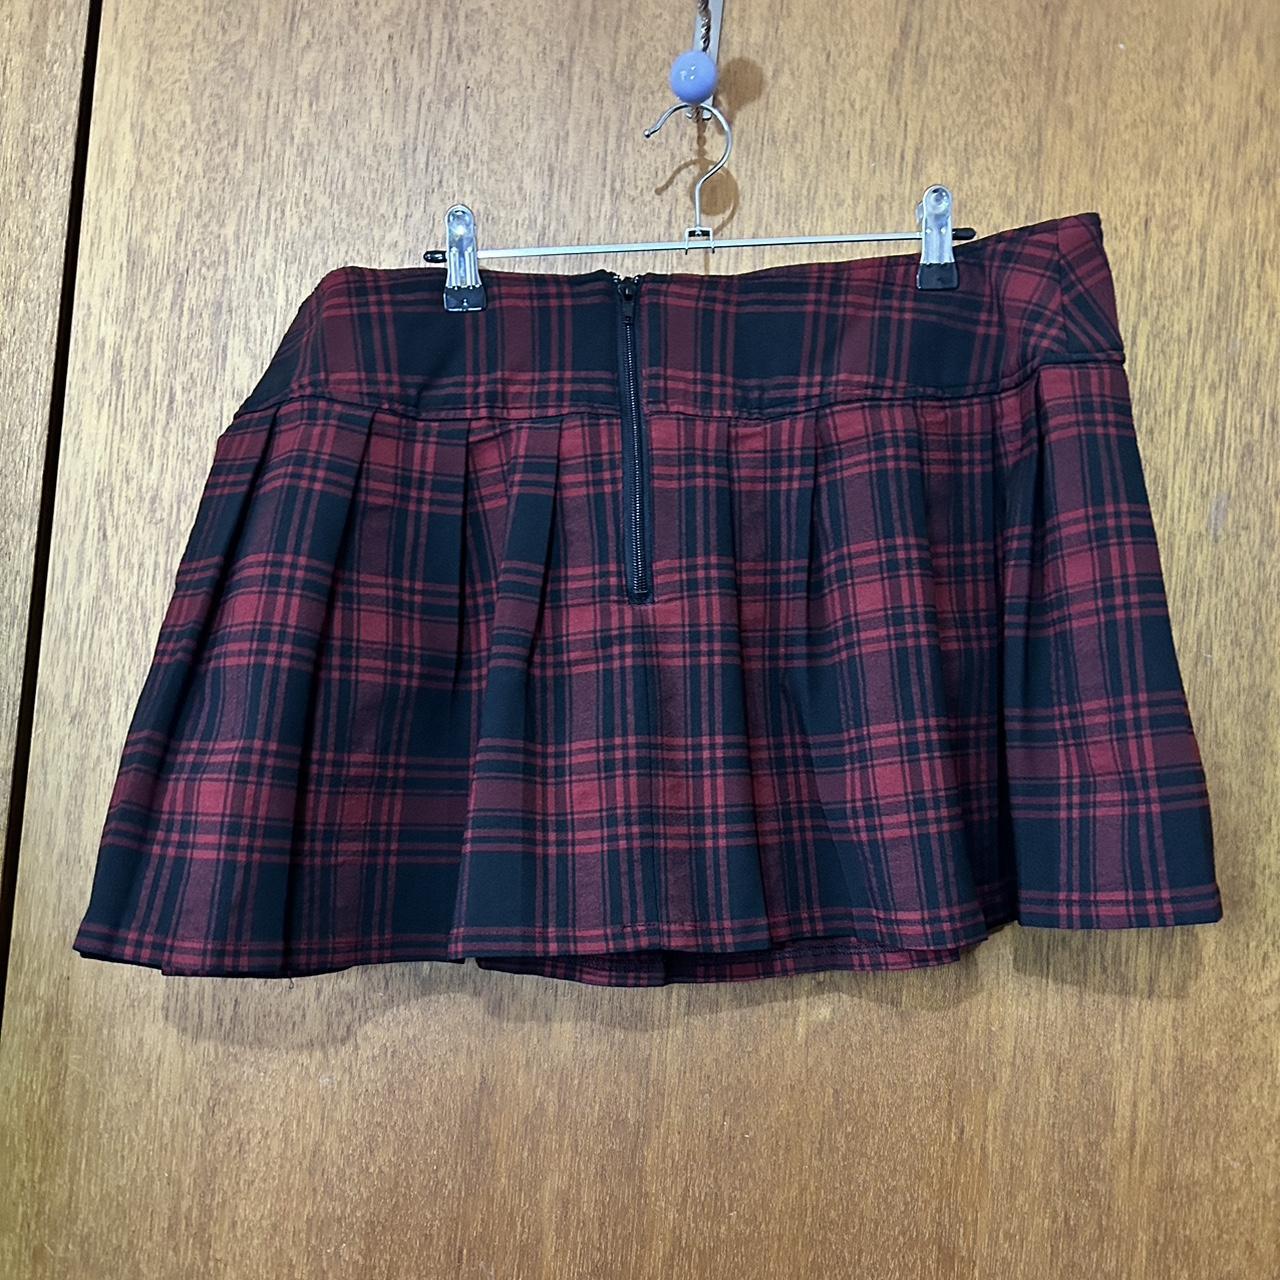 Killstar mini red plaid skirt in size 3XL suitable... - Depop